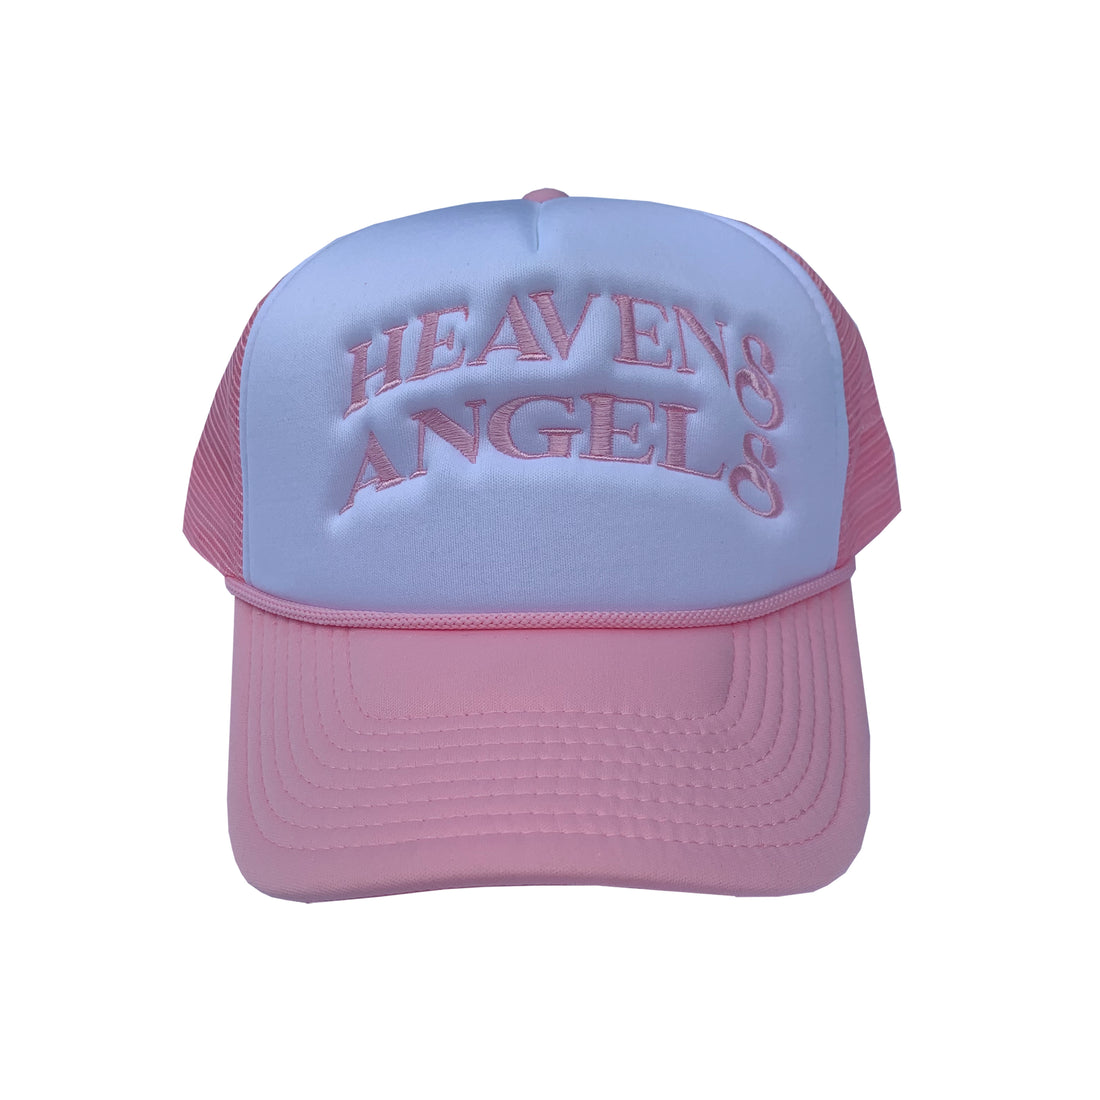 PINK HEAVENS ANGELS Trucker Hat